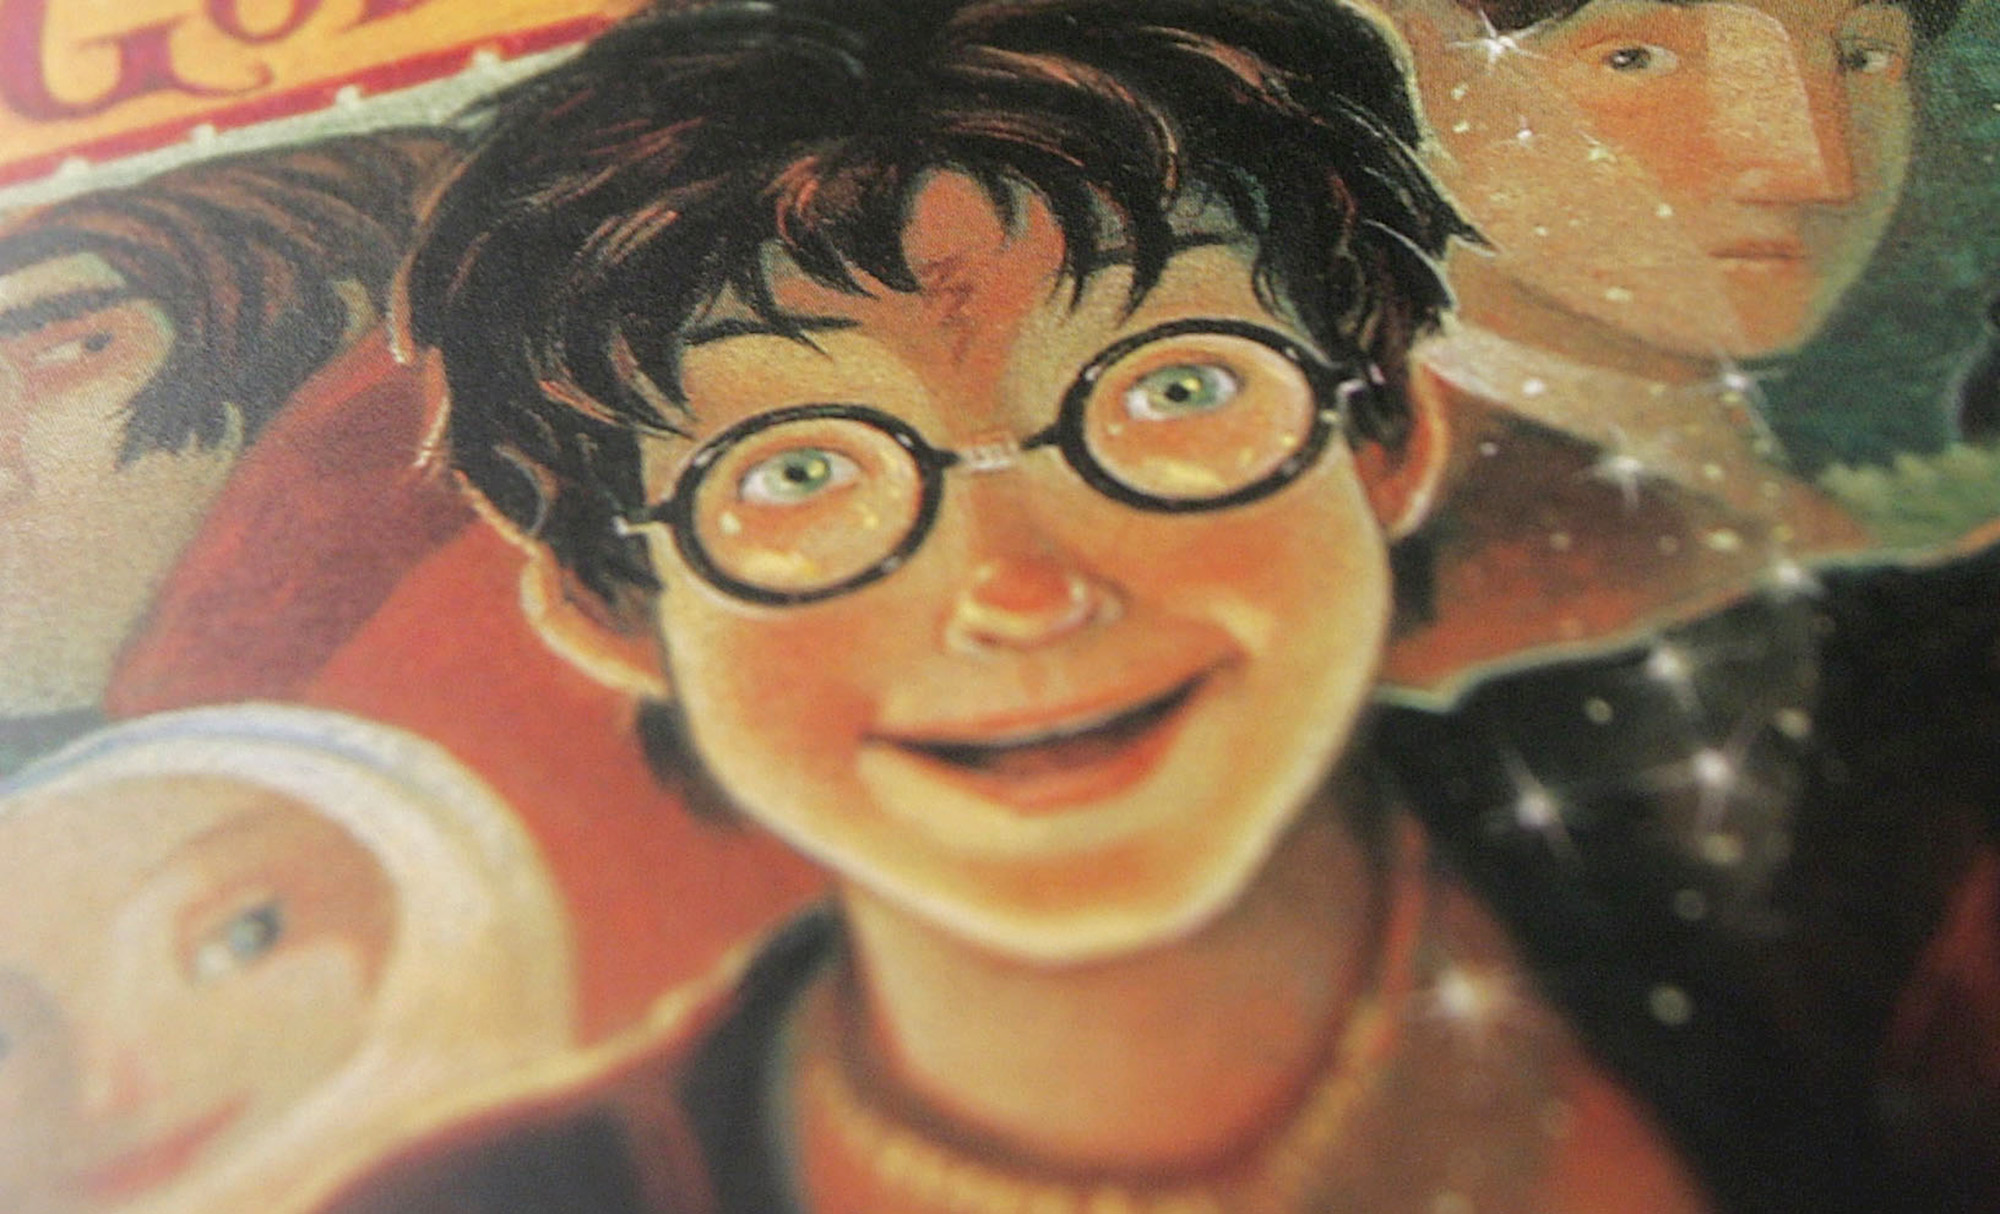 Copies of Harry Potter books&nbsp;